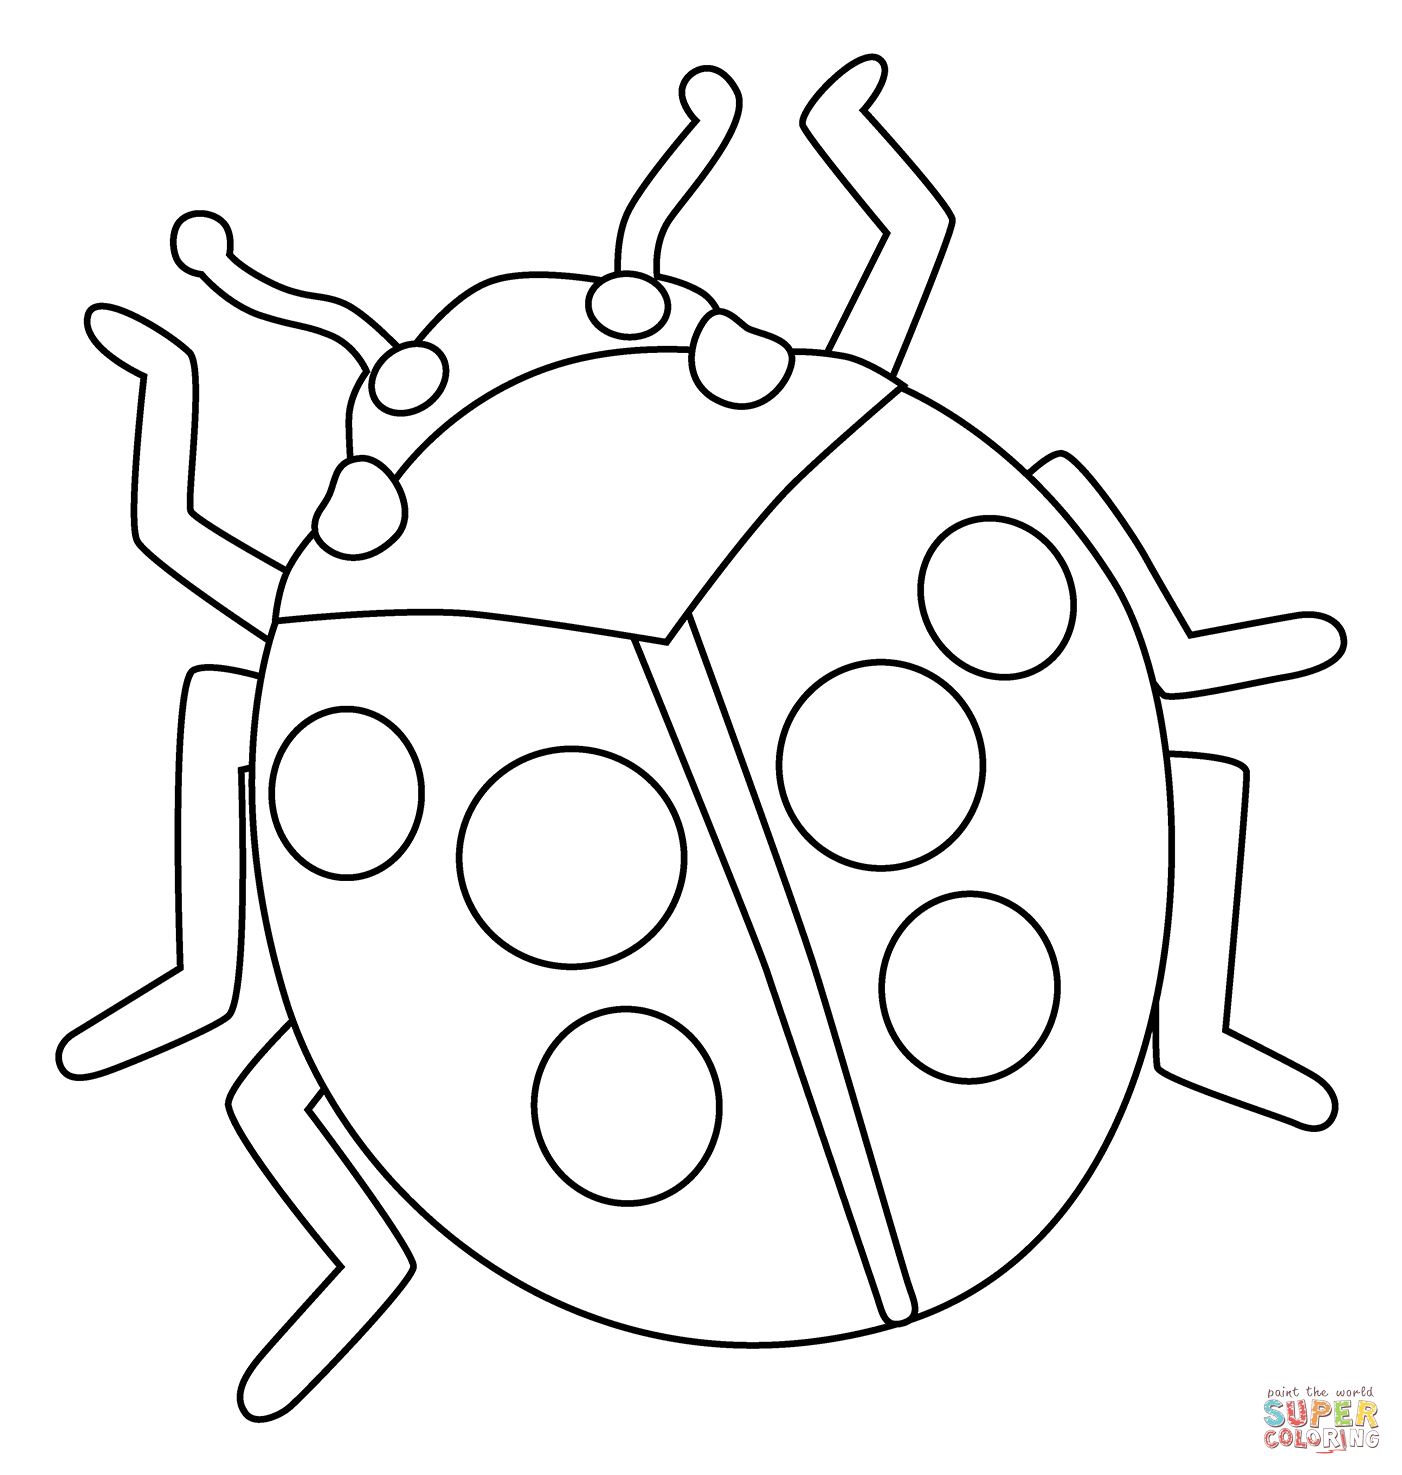 Lady beetle emoji coloring page free printable coloring pages